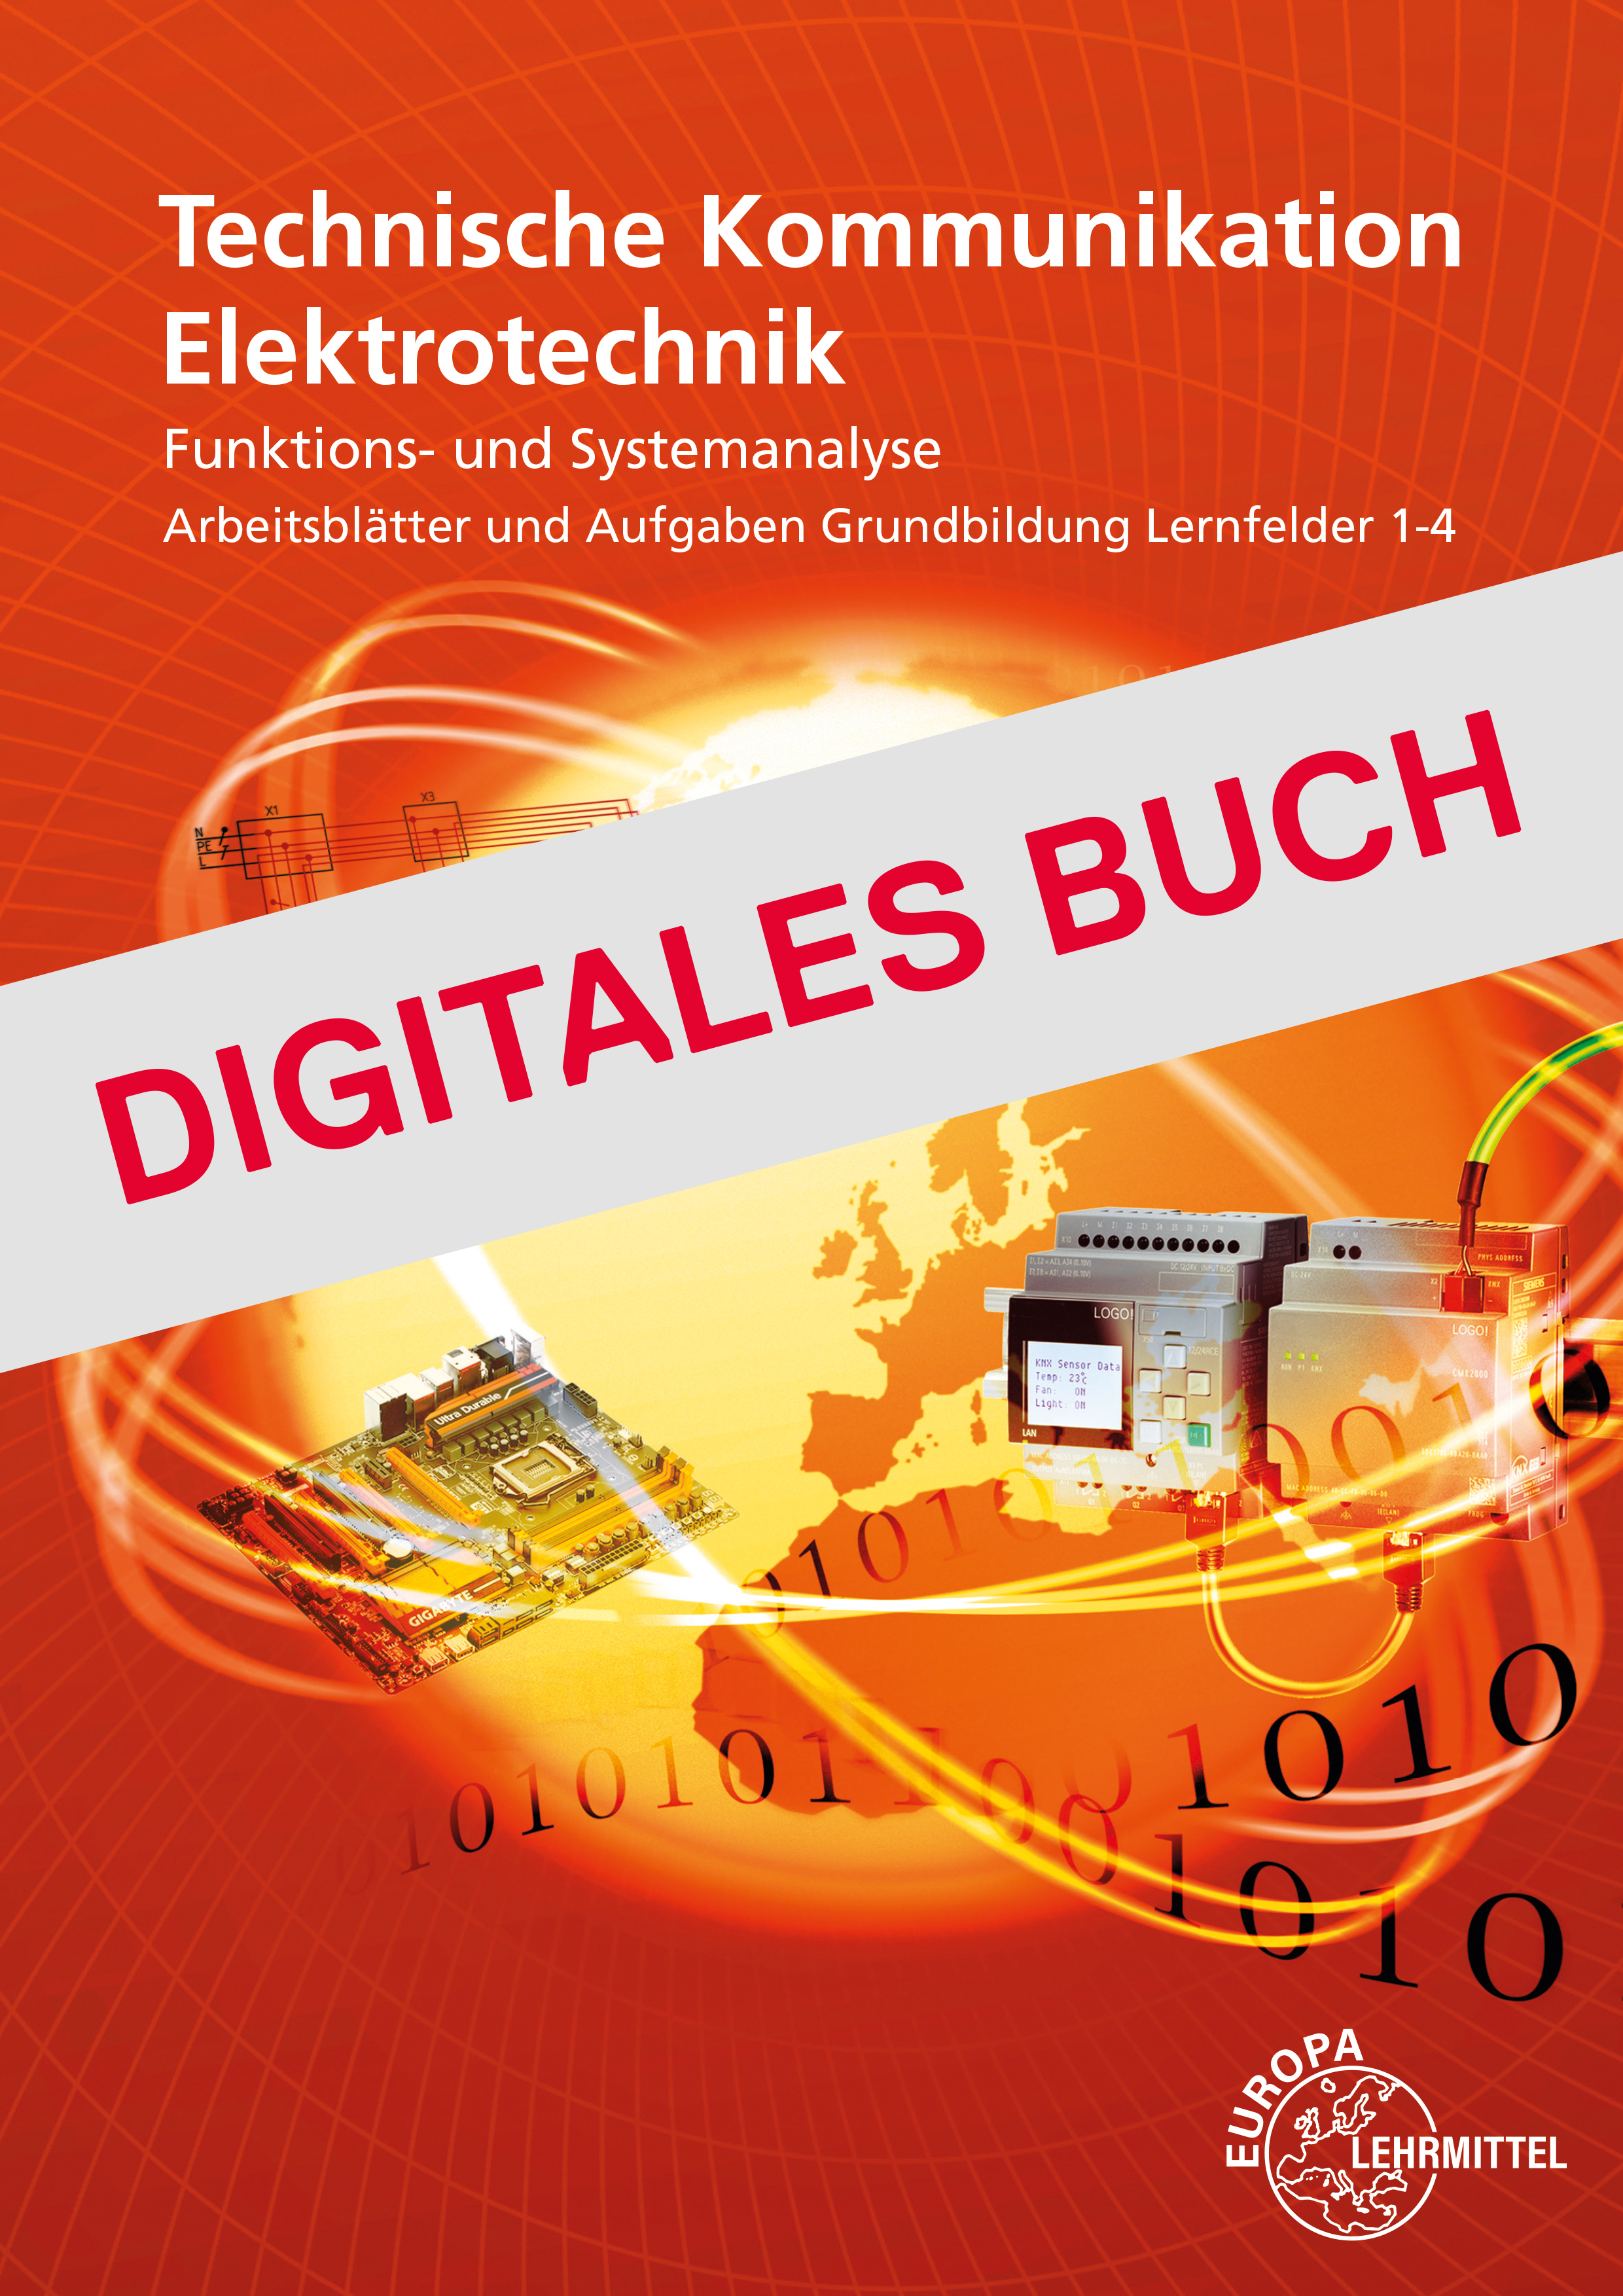 Technische Kommunikation Elektrotechnik Lernfeld 1-4 - Digitales Buch